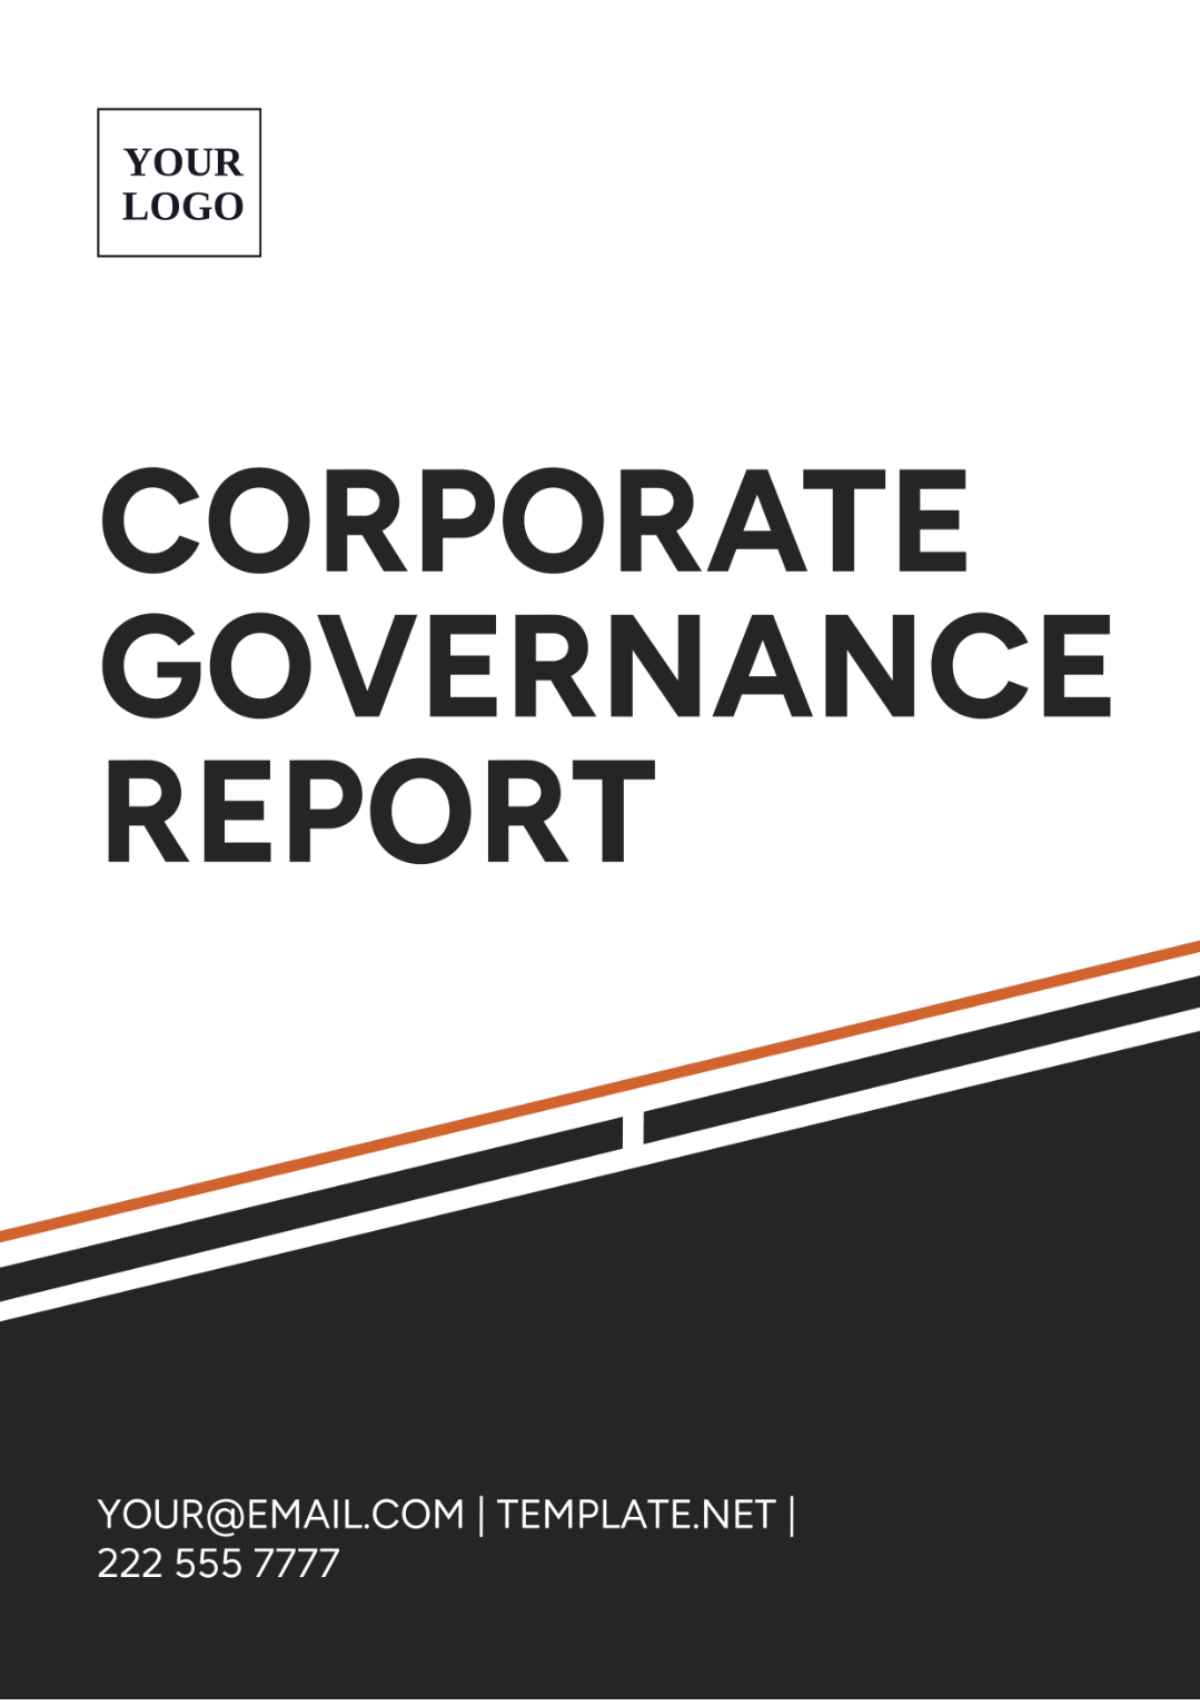 Corporate Governance Report Template